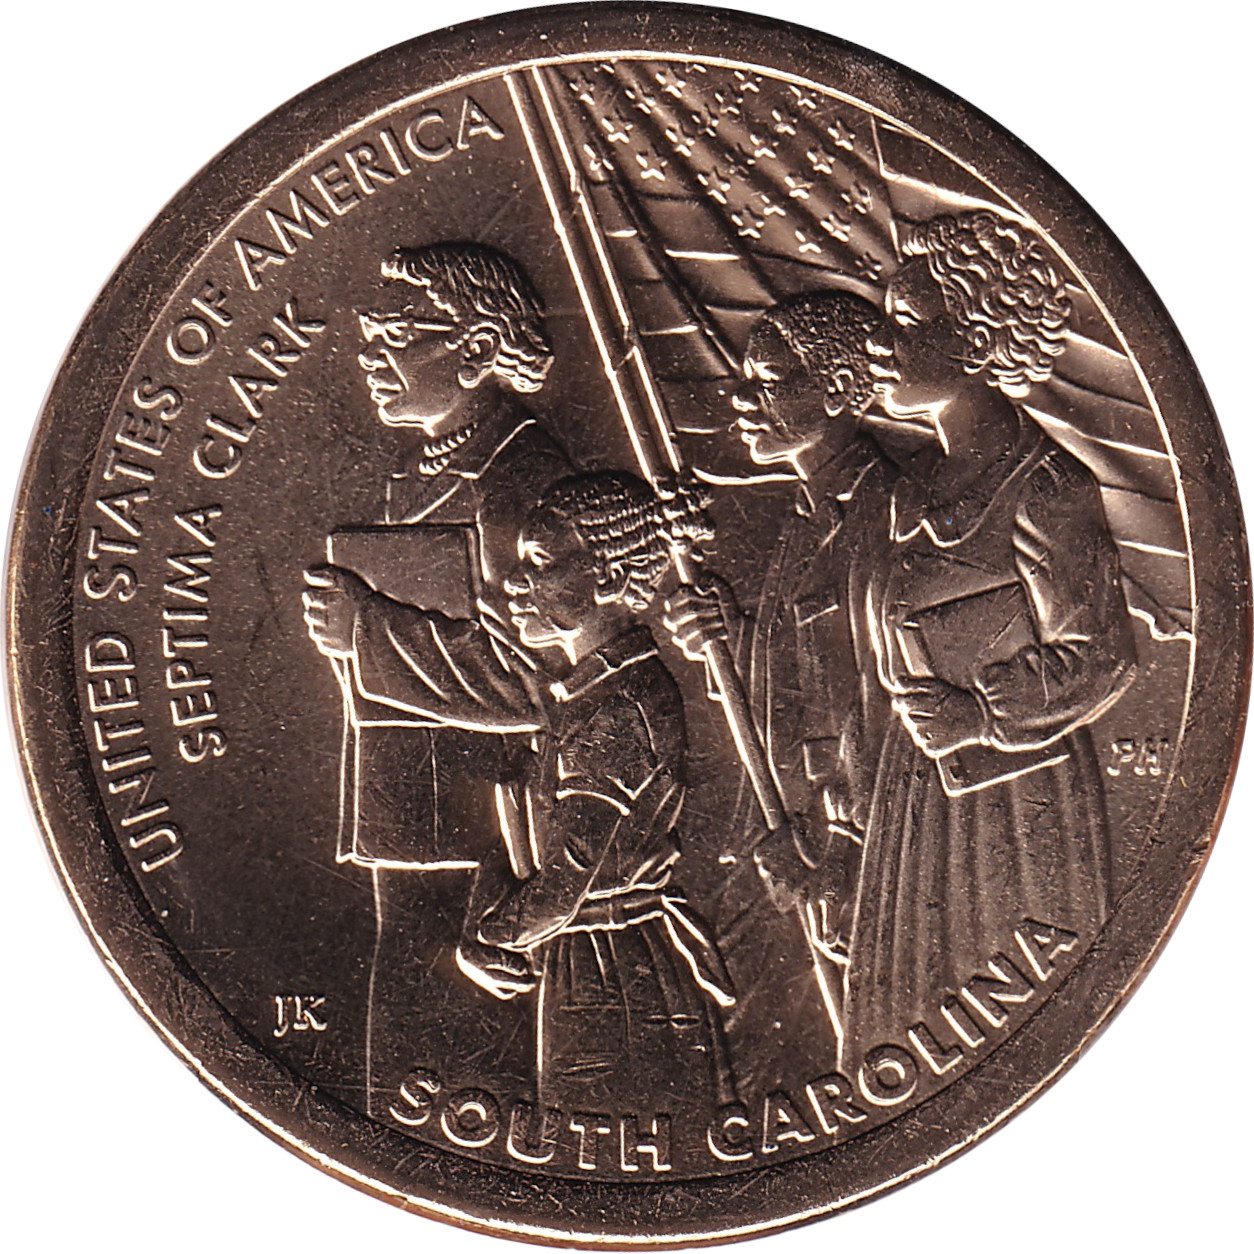 1 dollar - South Carolina